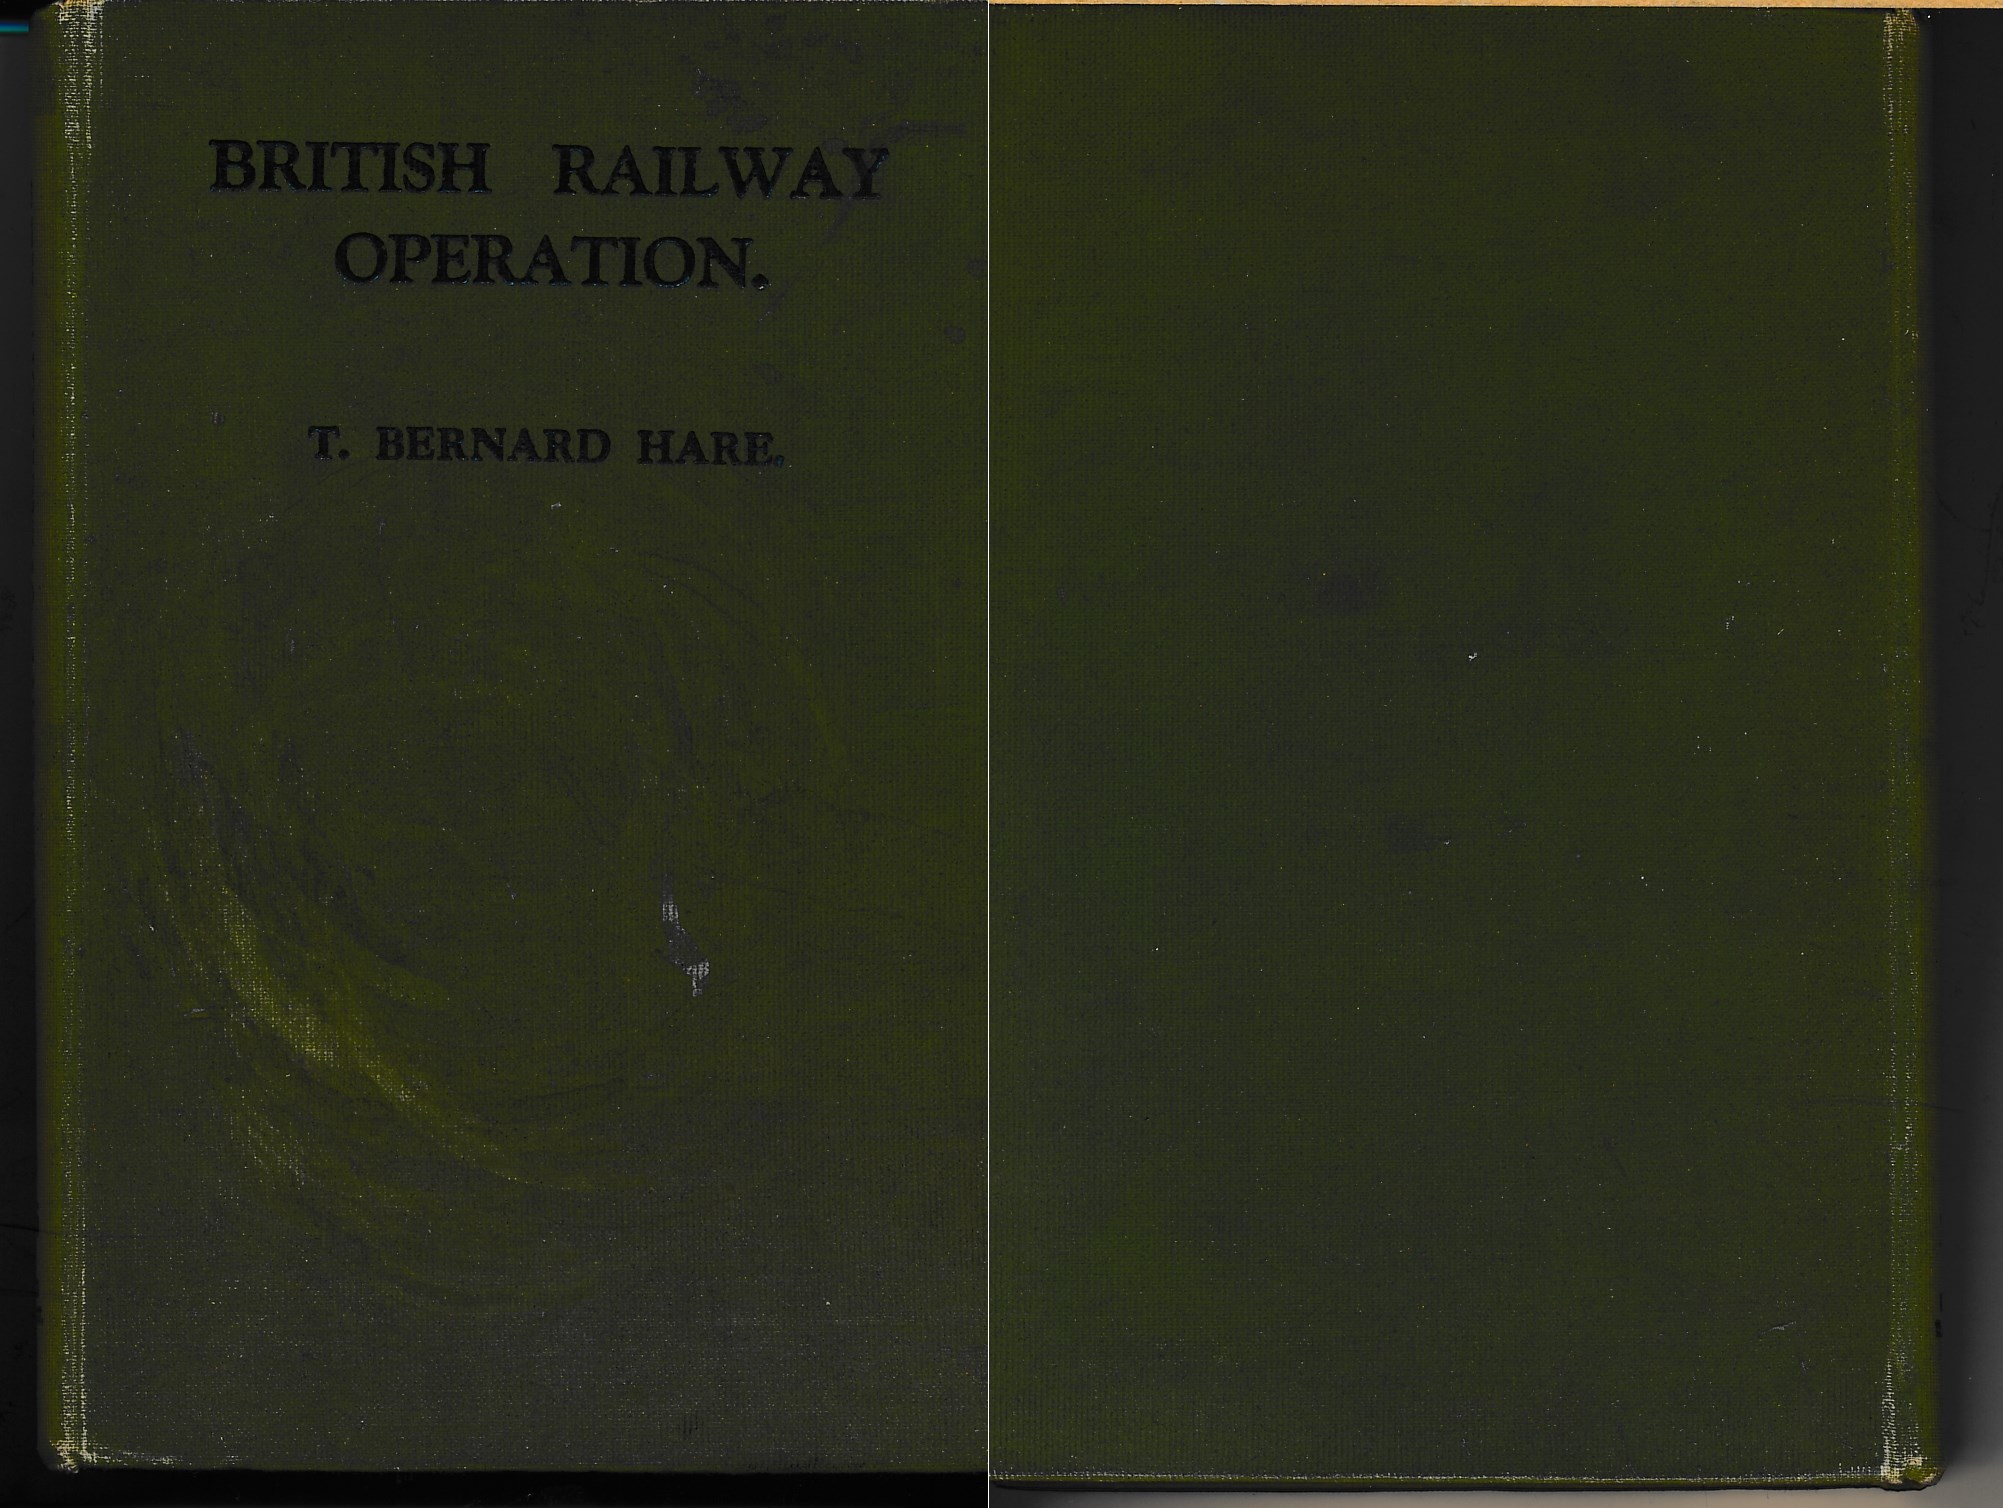 British Railway Opperation - T Bernard Hare